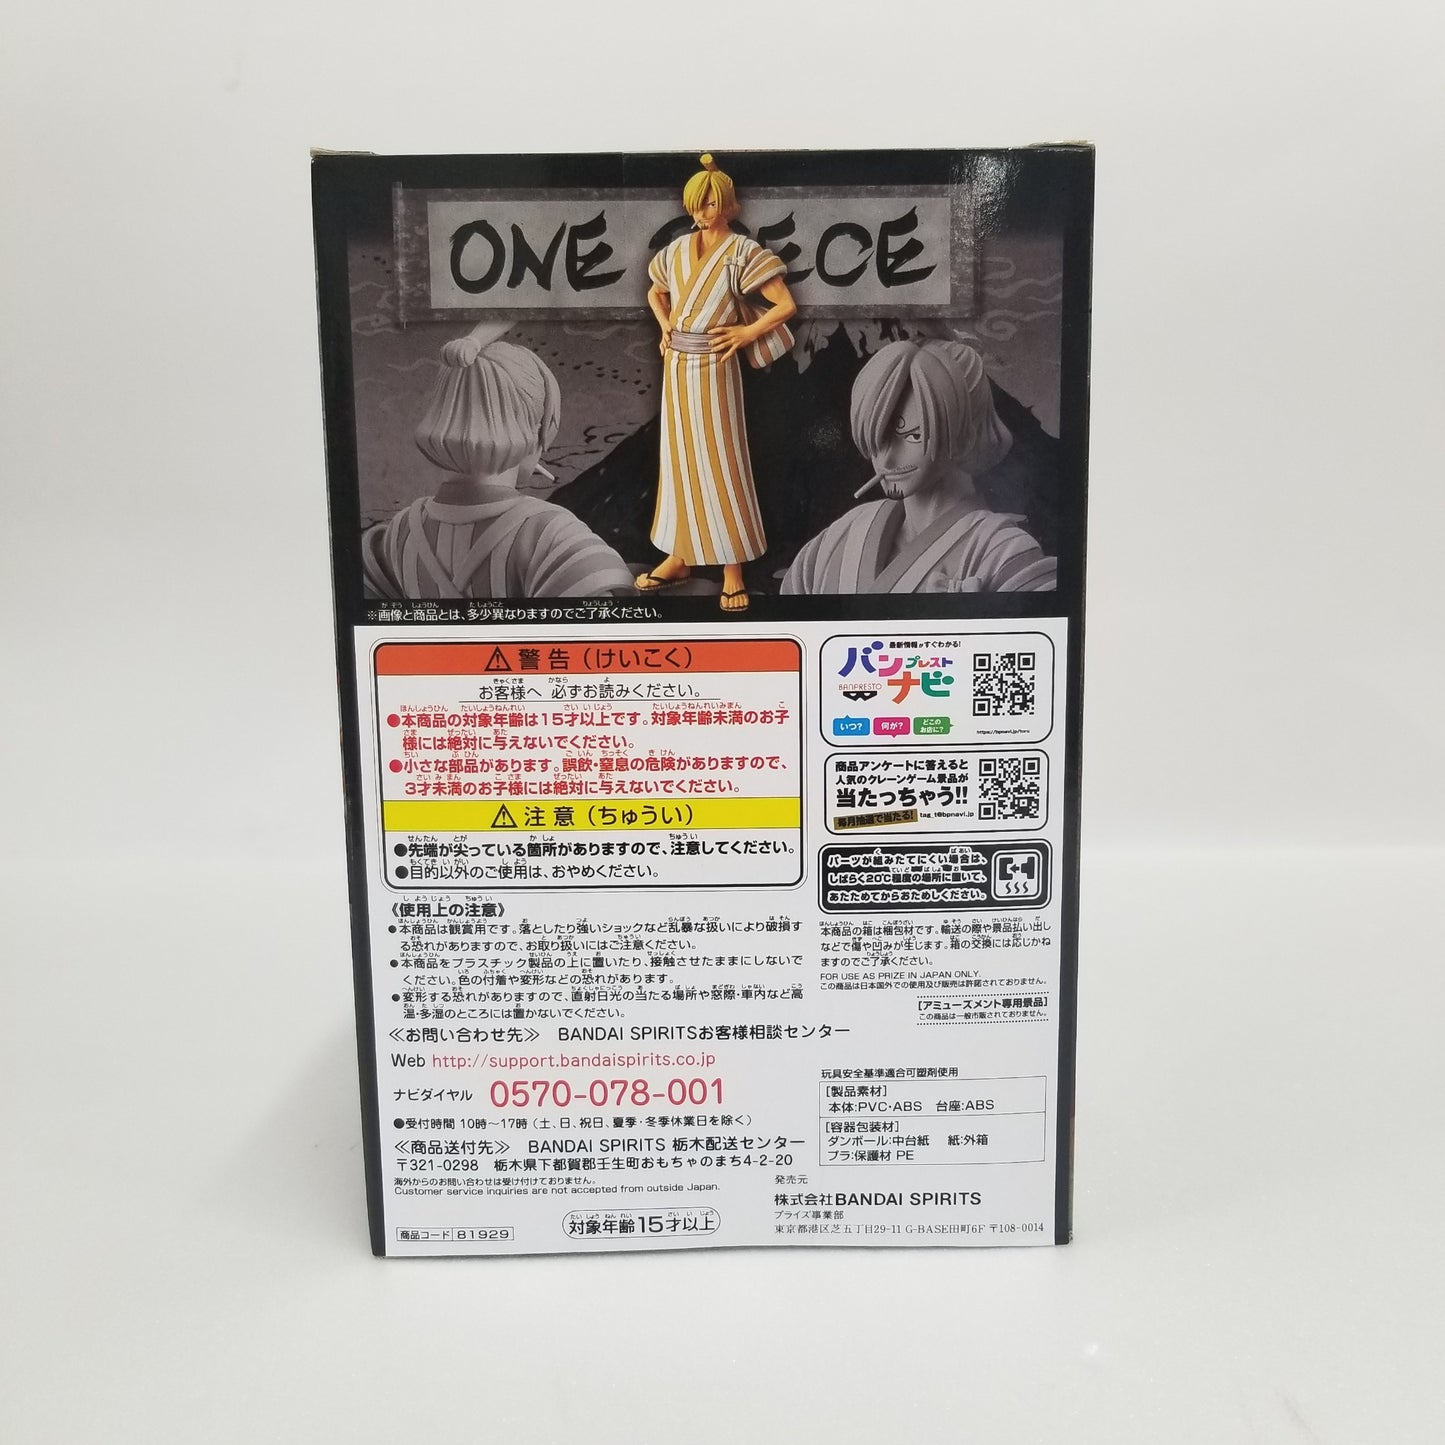 Banpresto One Piece DXF -The Grandline Men- Wa no Kuni Vol.5 Sanji